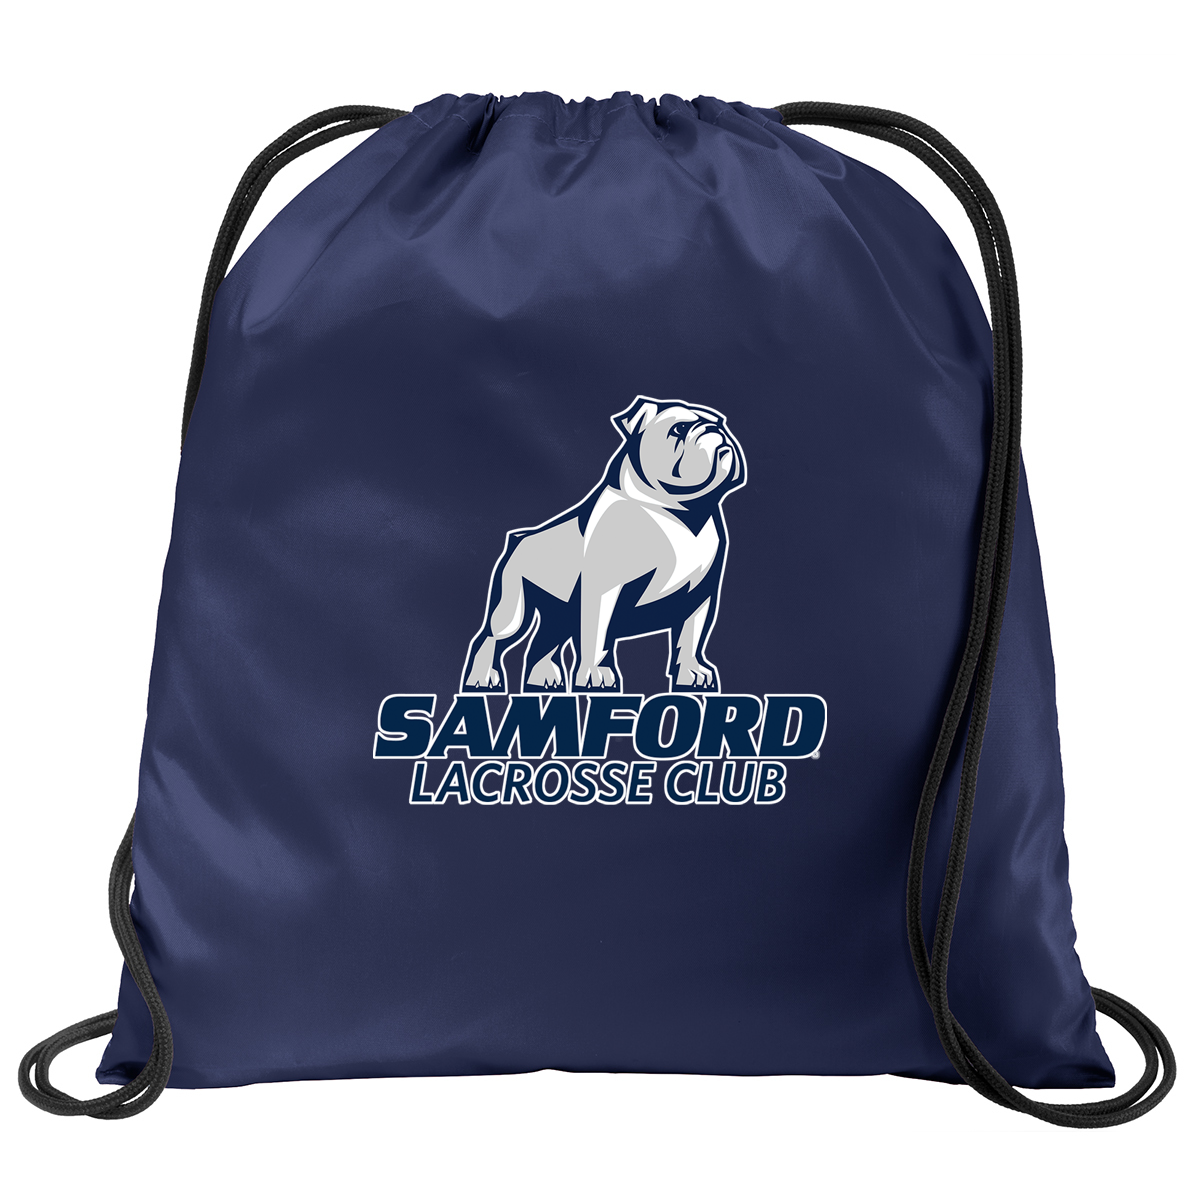 Samford University Lacrosse Club Cinch Pack